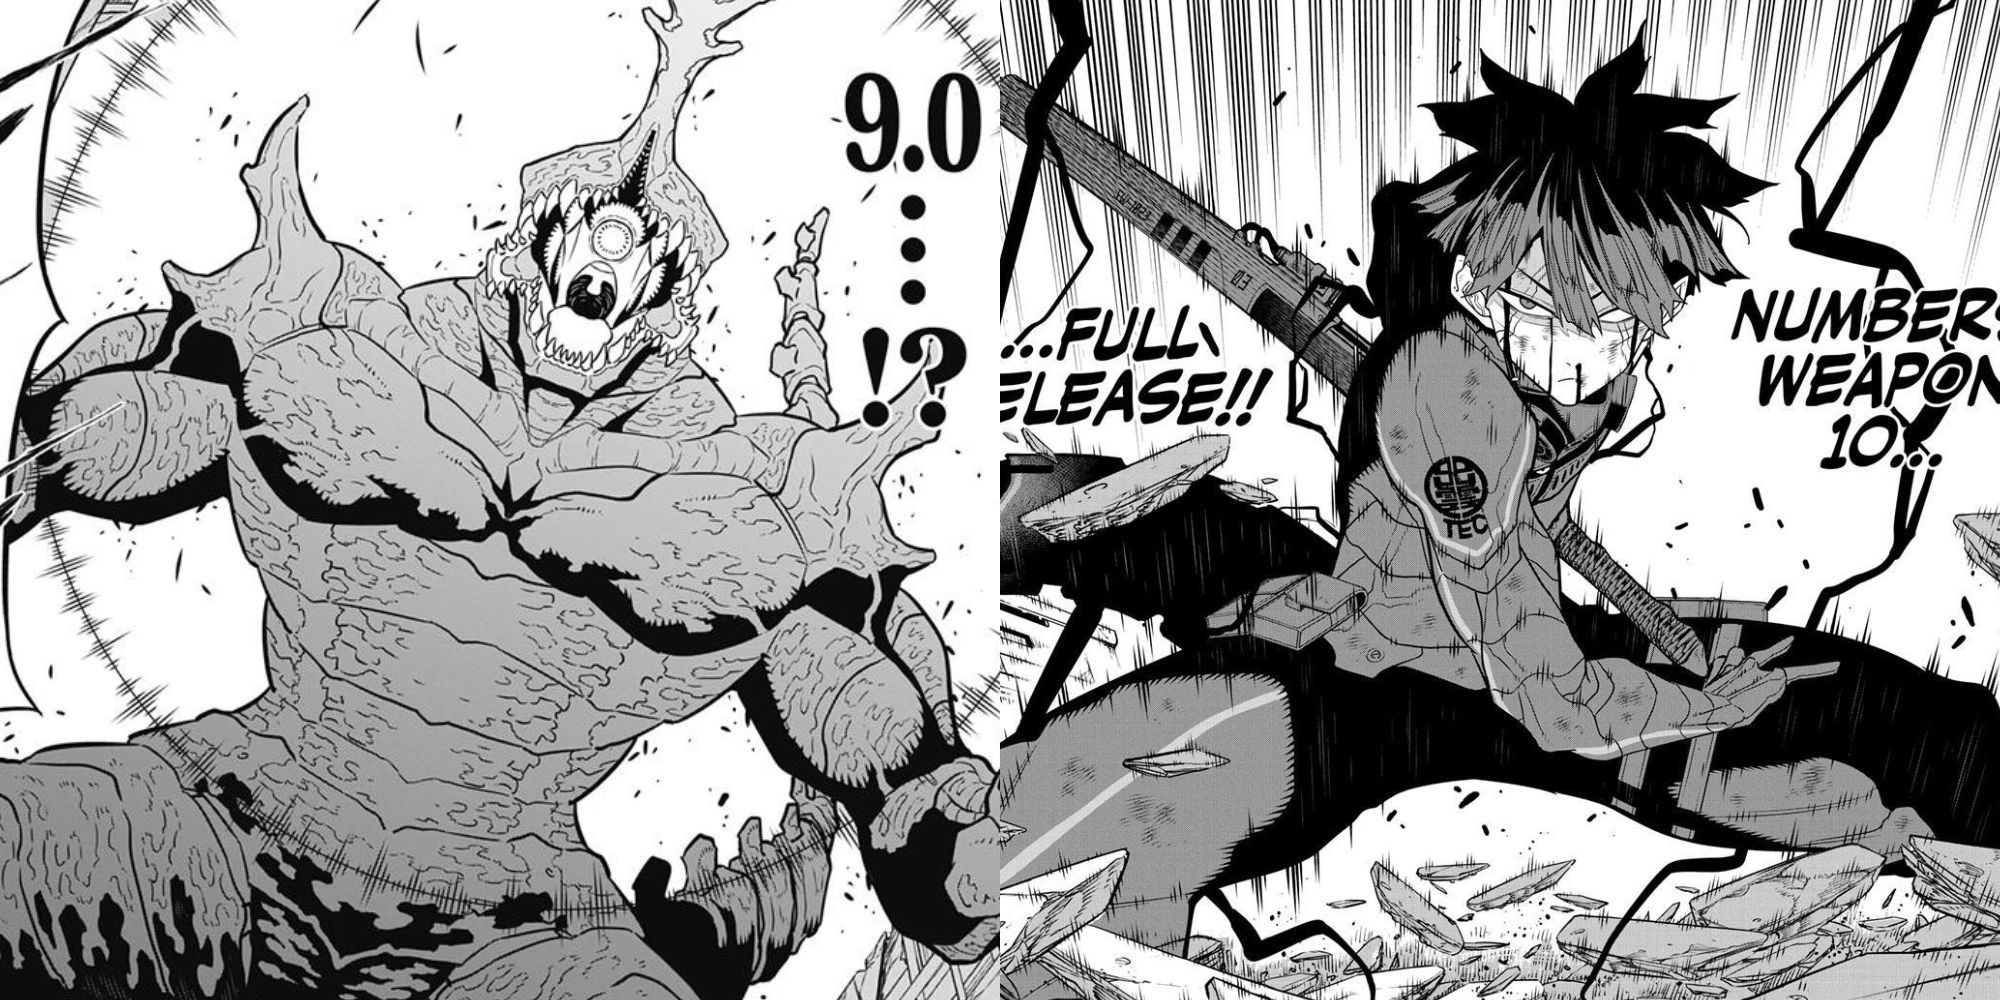 A gigantic Kaiju No. 10 attacks Hoshina, and Hoshina using Numbers Weapon 10 at full power.